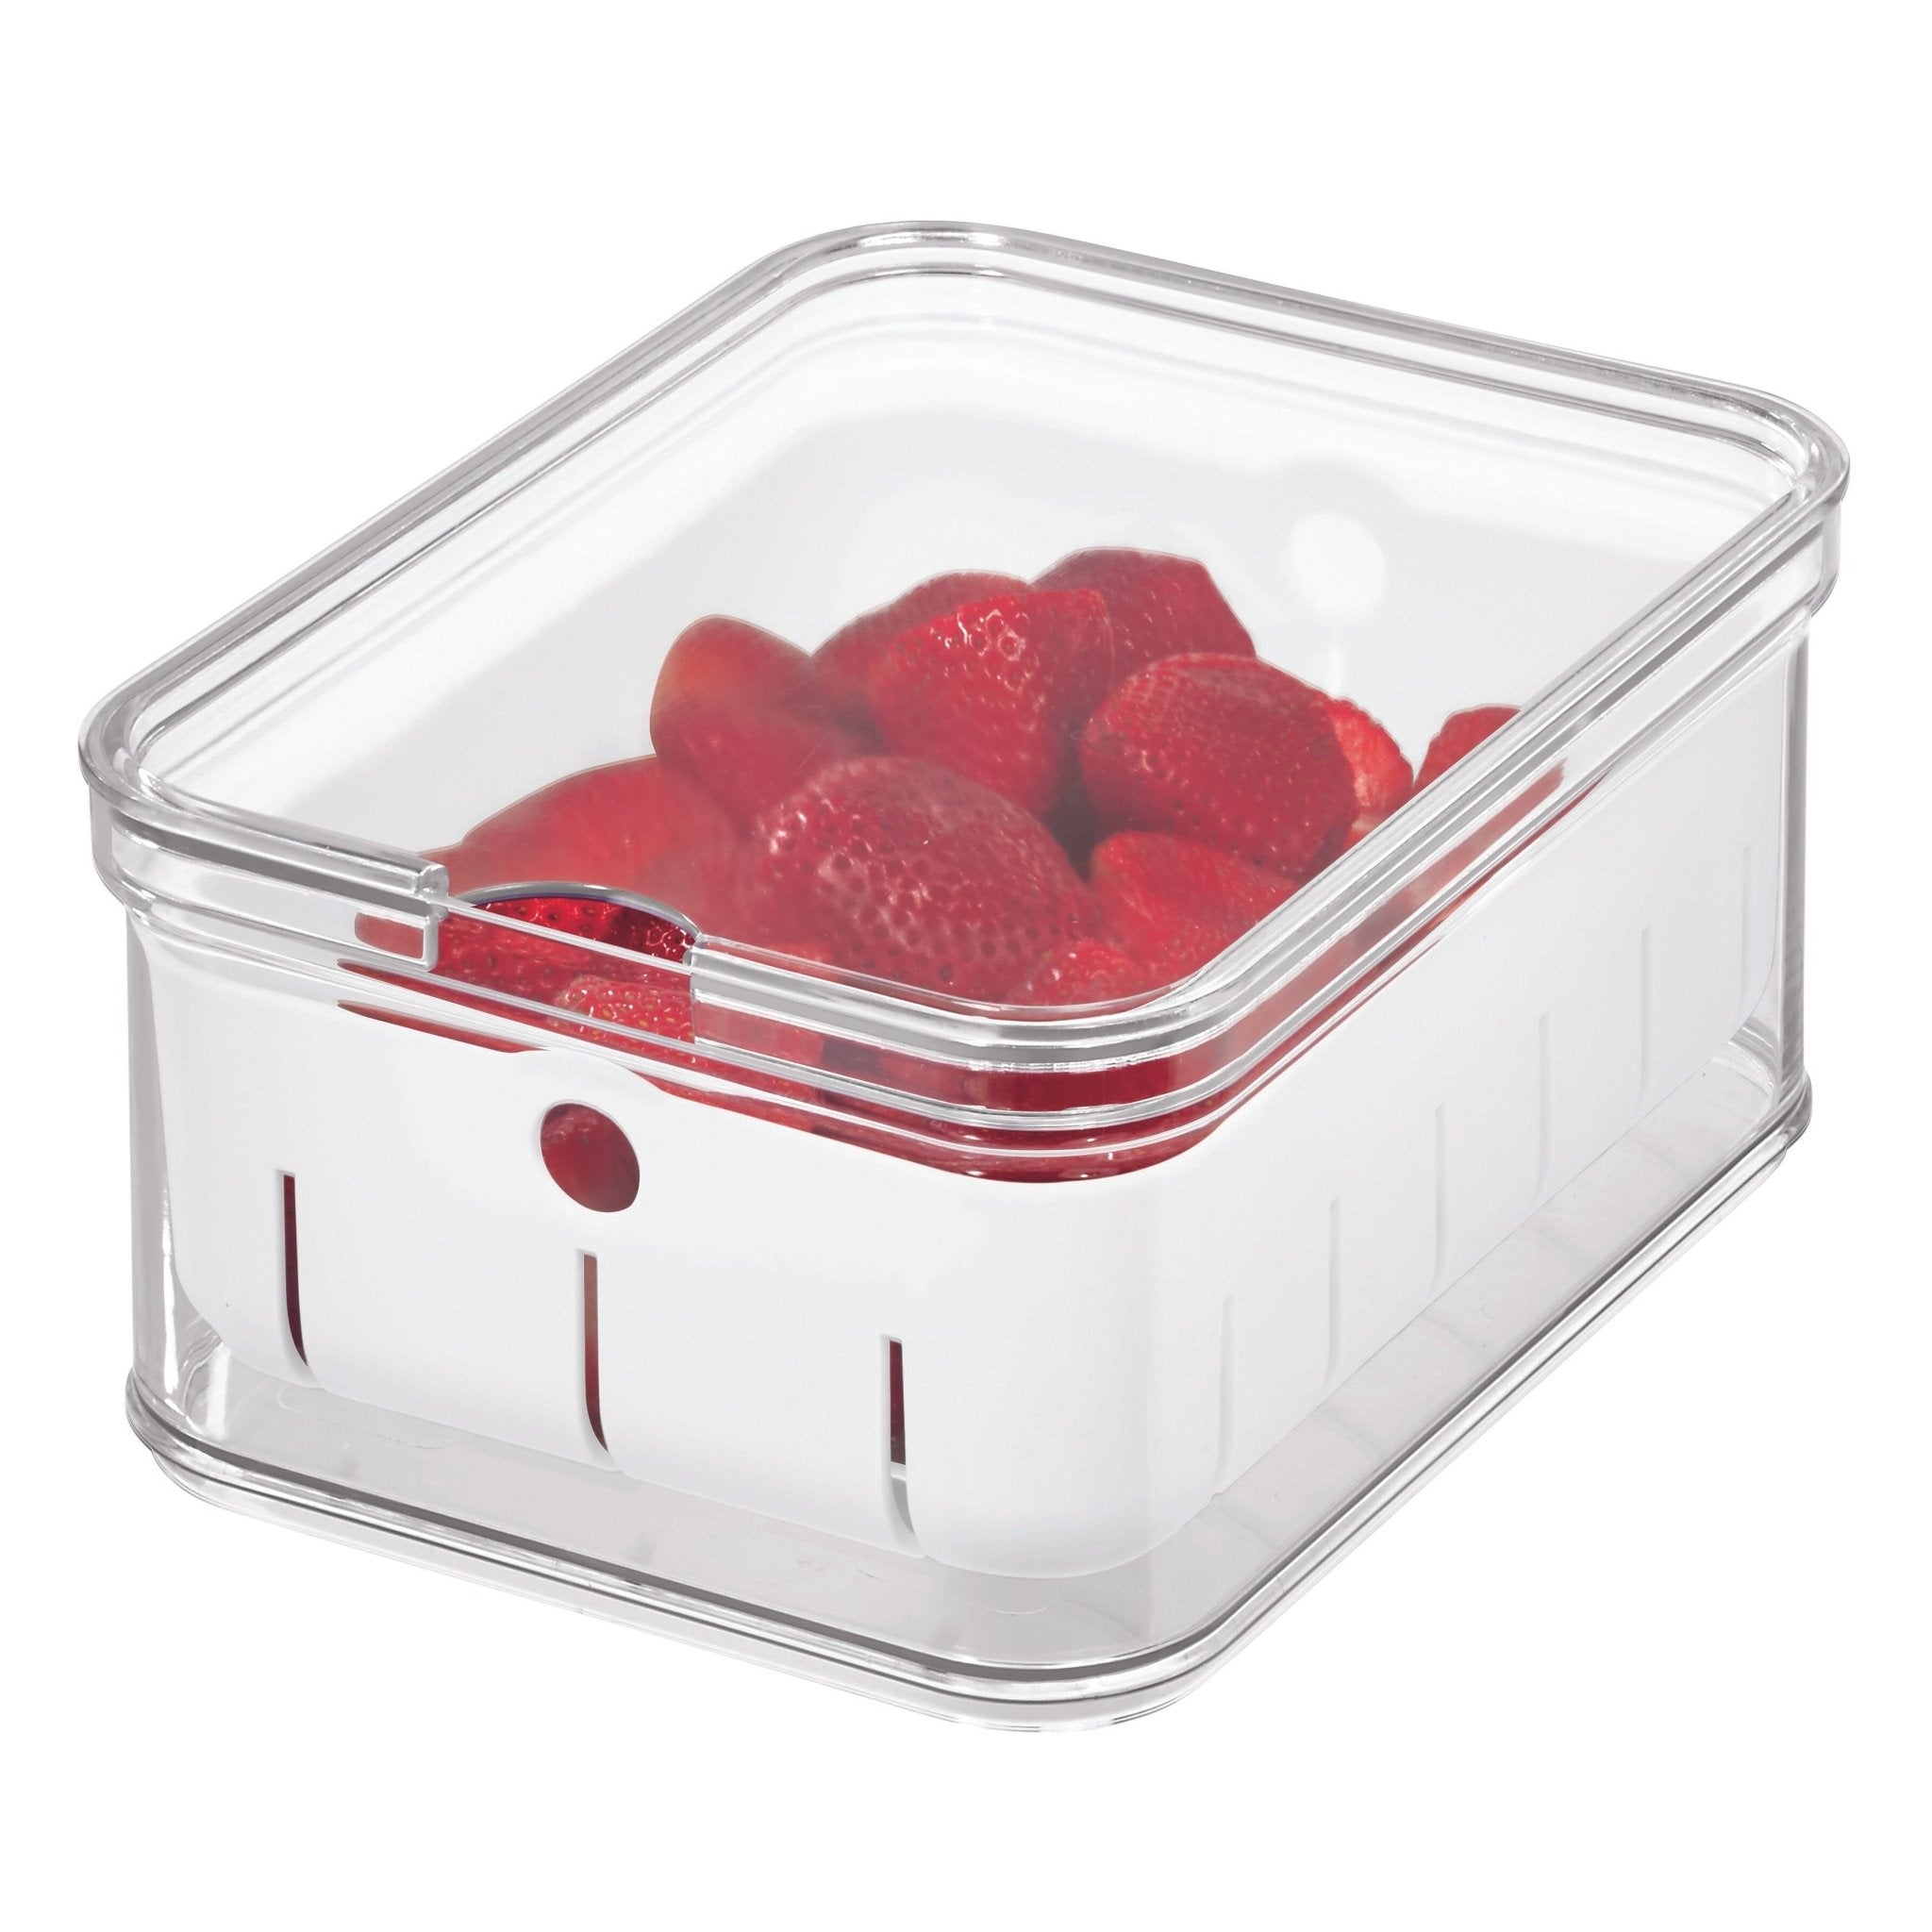 Idesign crisp cupboard box clear for berries